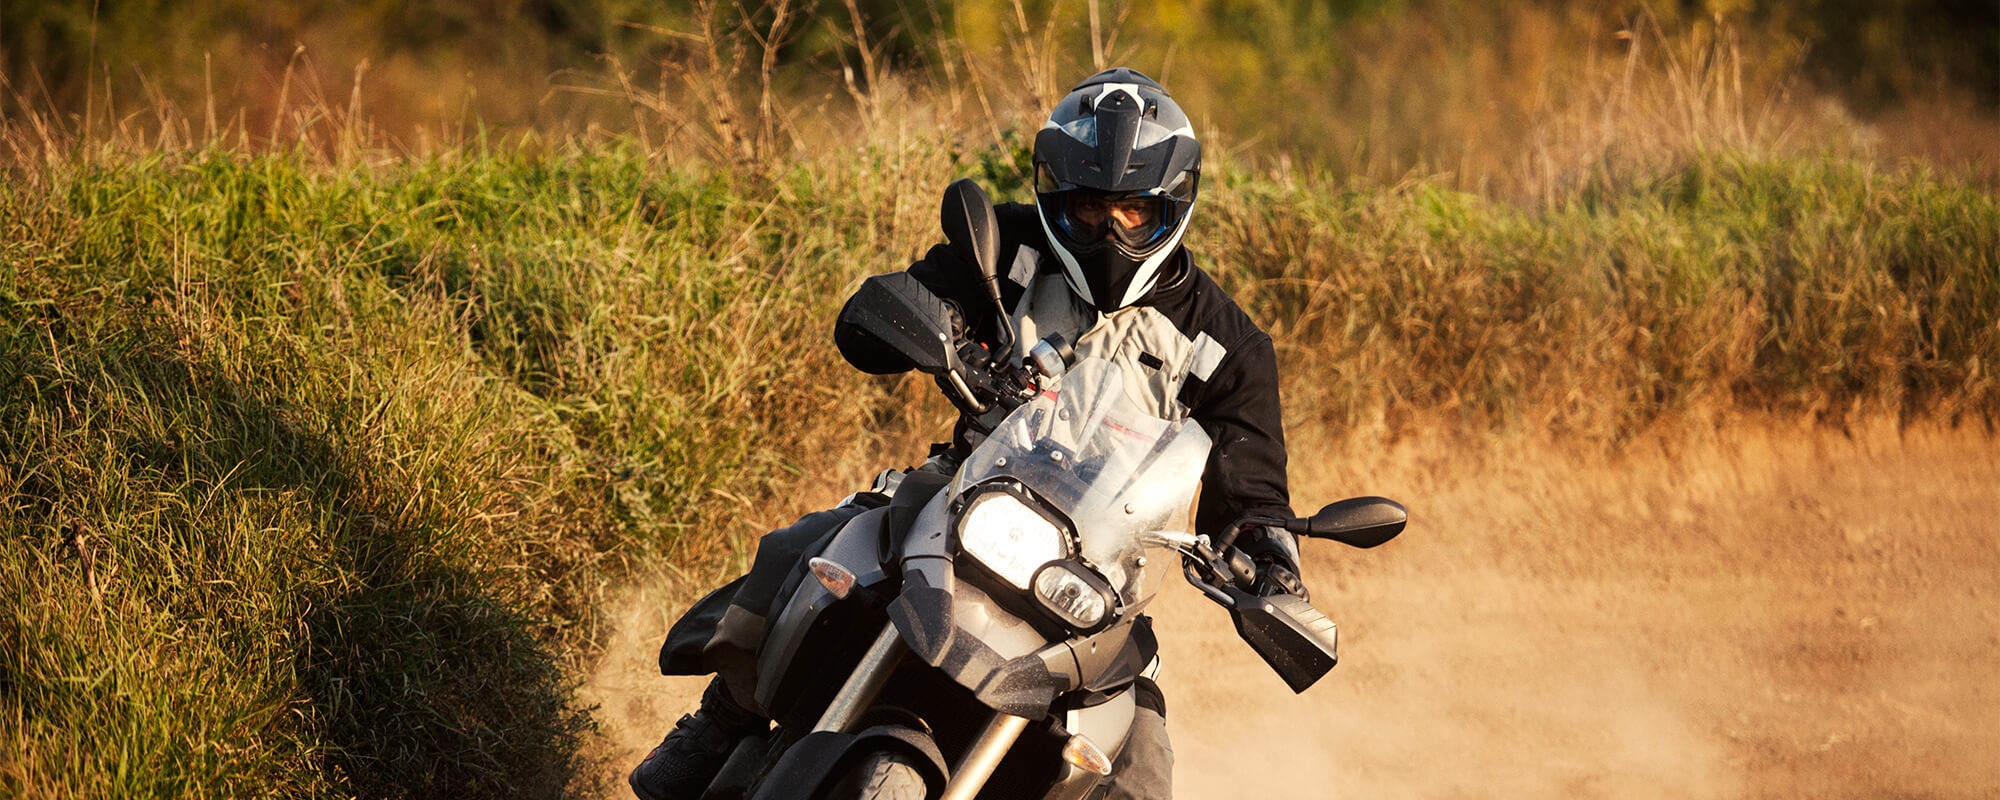 ATV & Motorcycle Insurance | Louisiana Farm Bureau Insurance